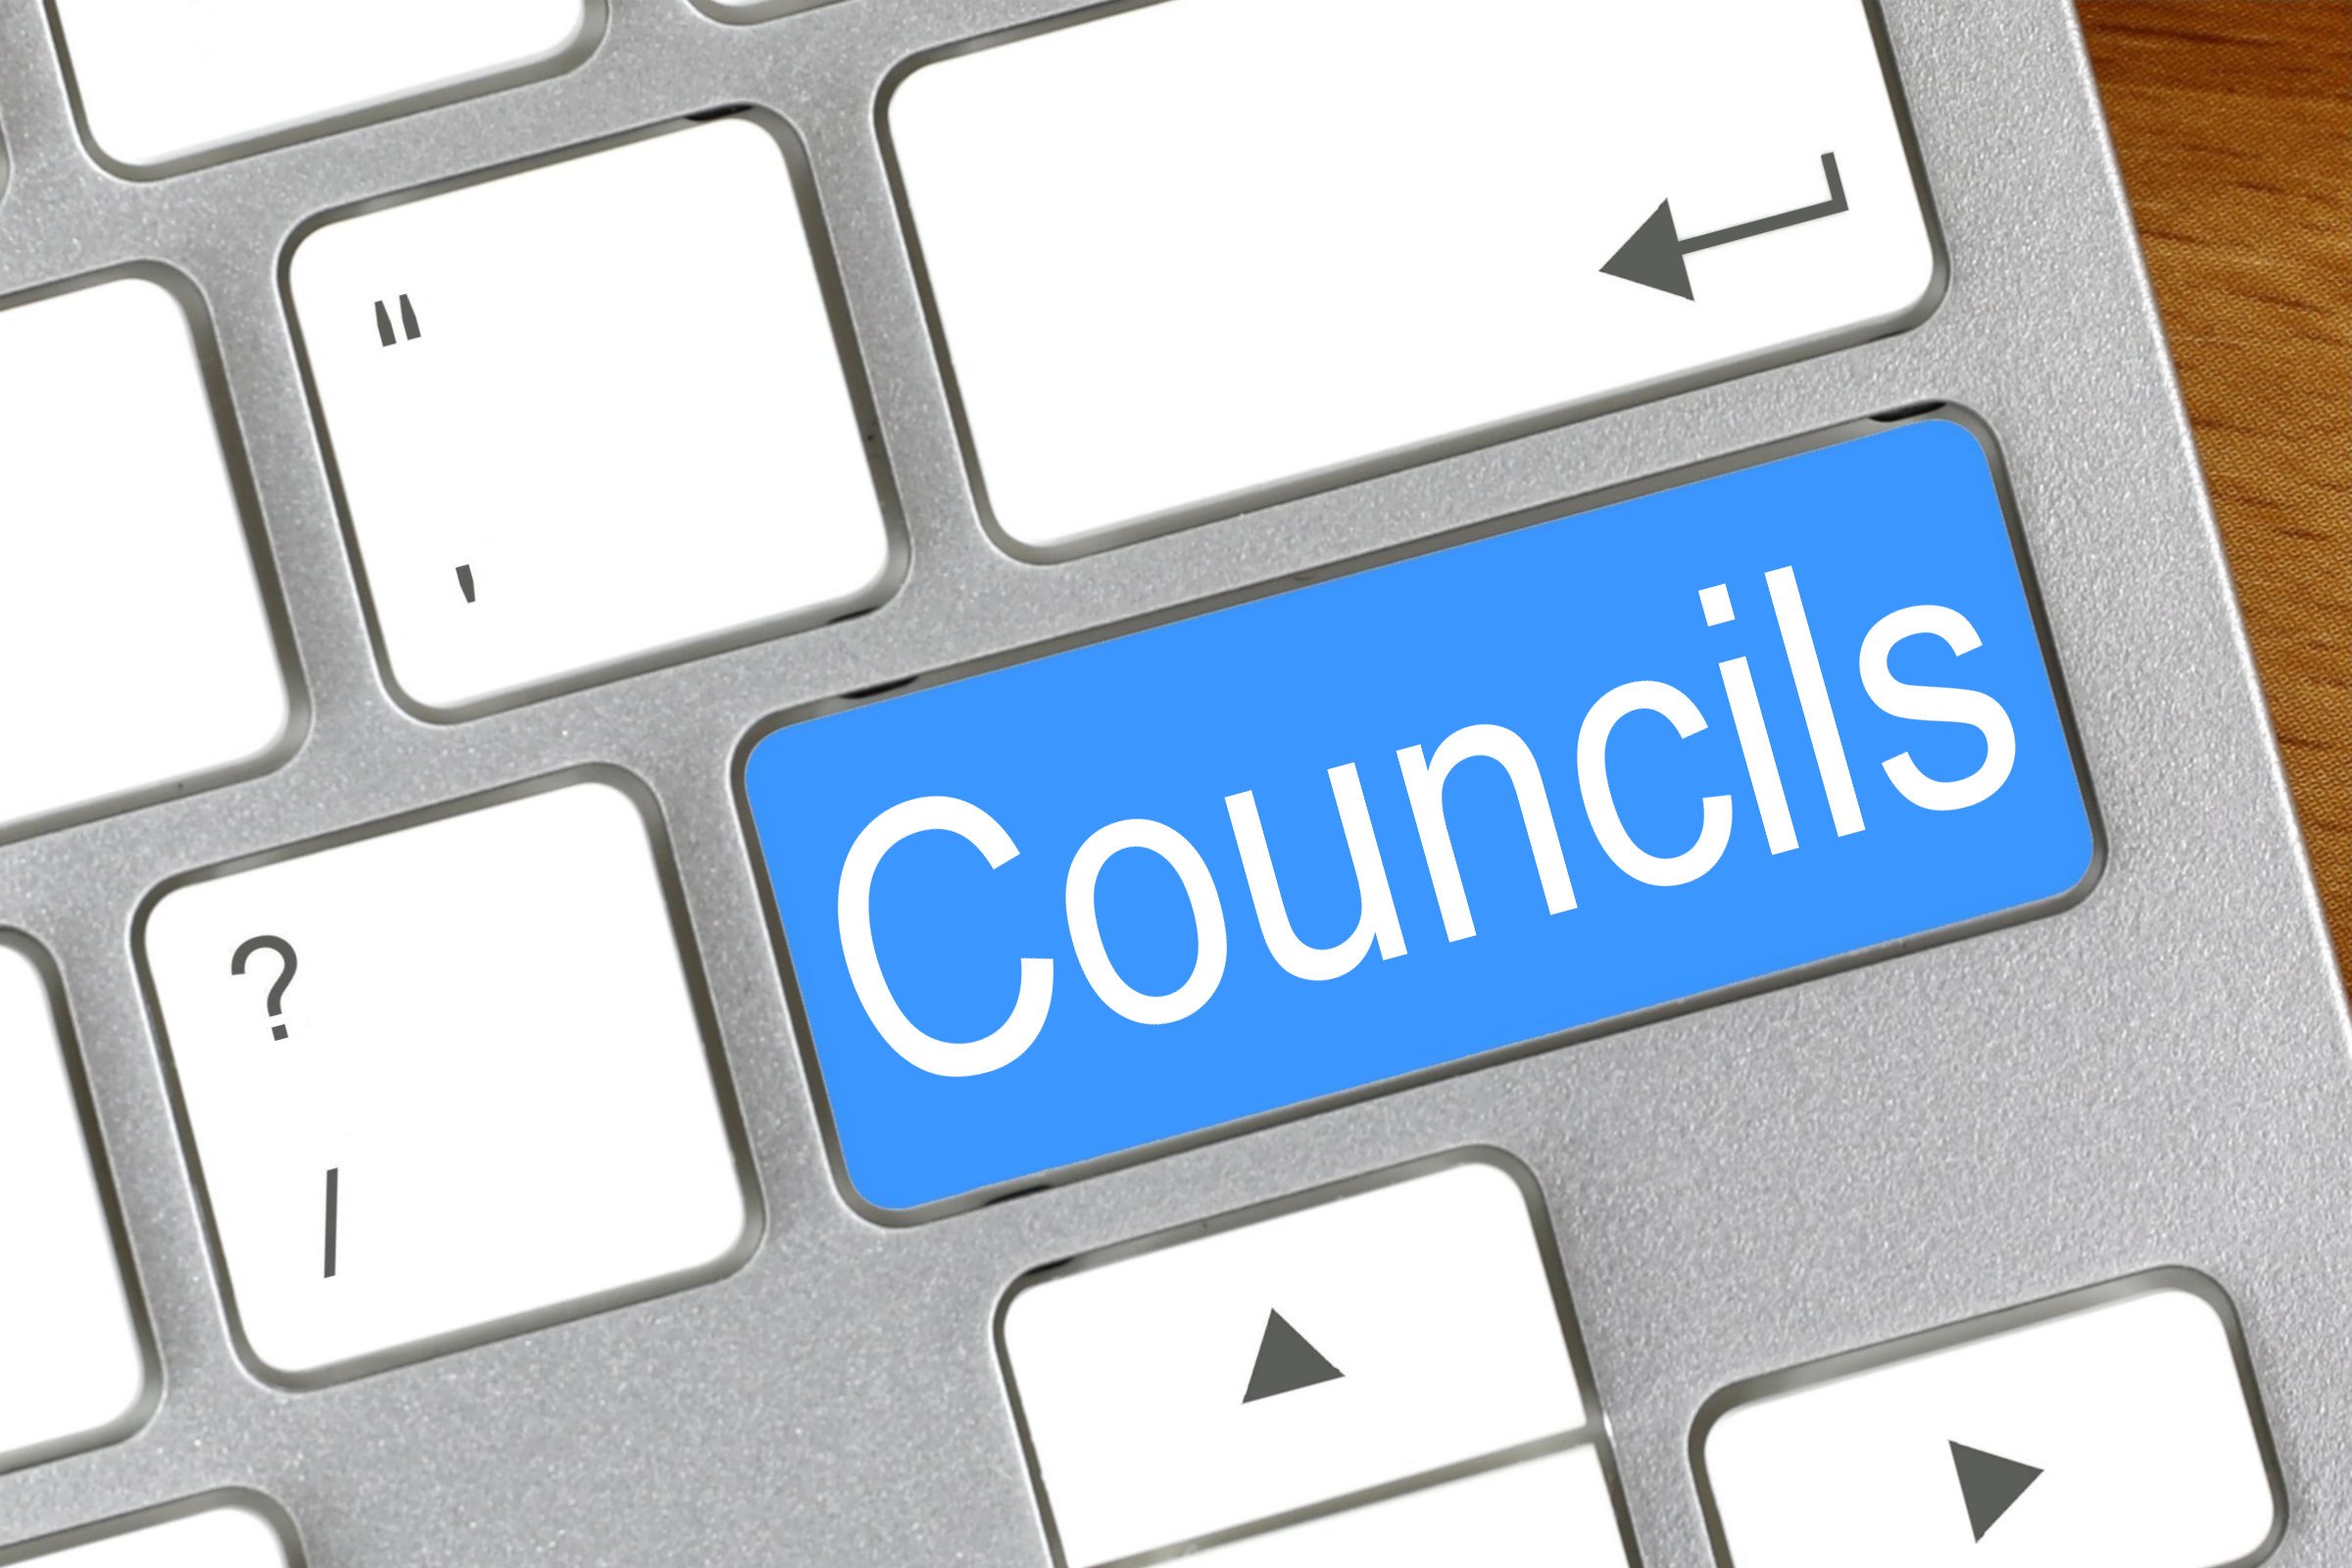 councils